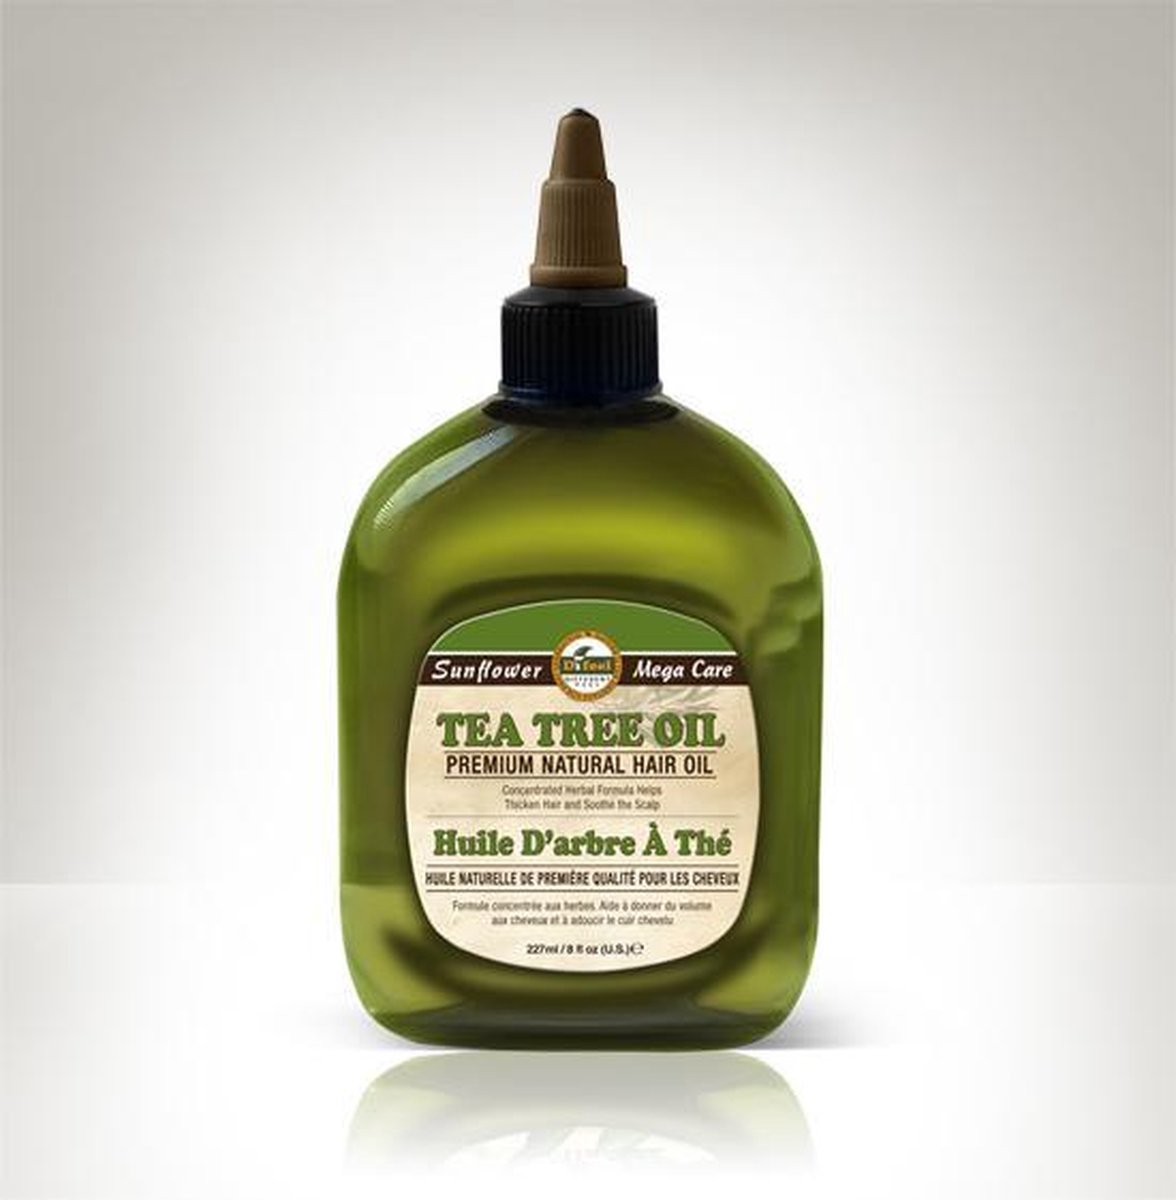 Tea Tree Oil - Premium Natural Hair Oil